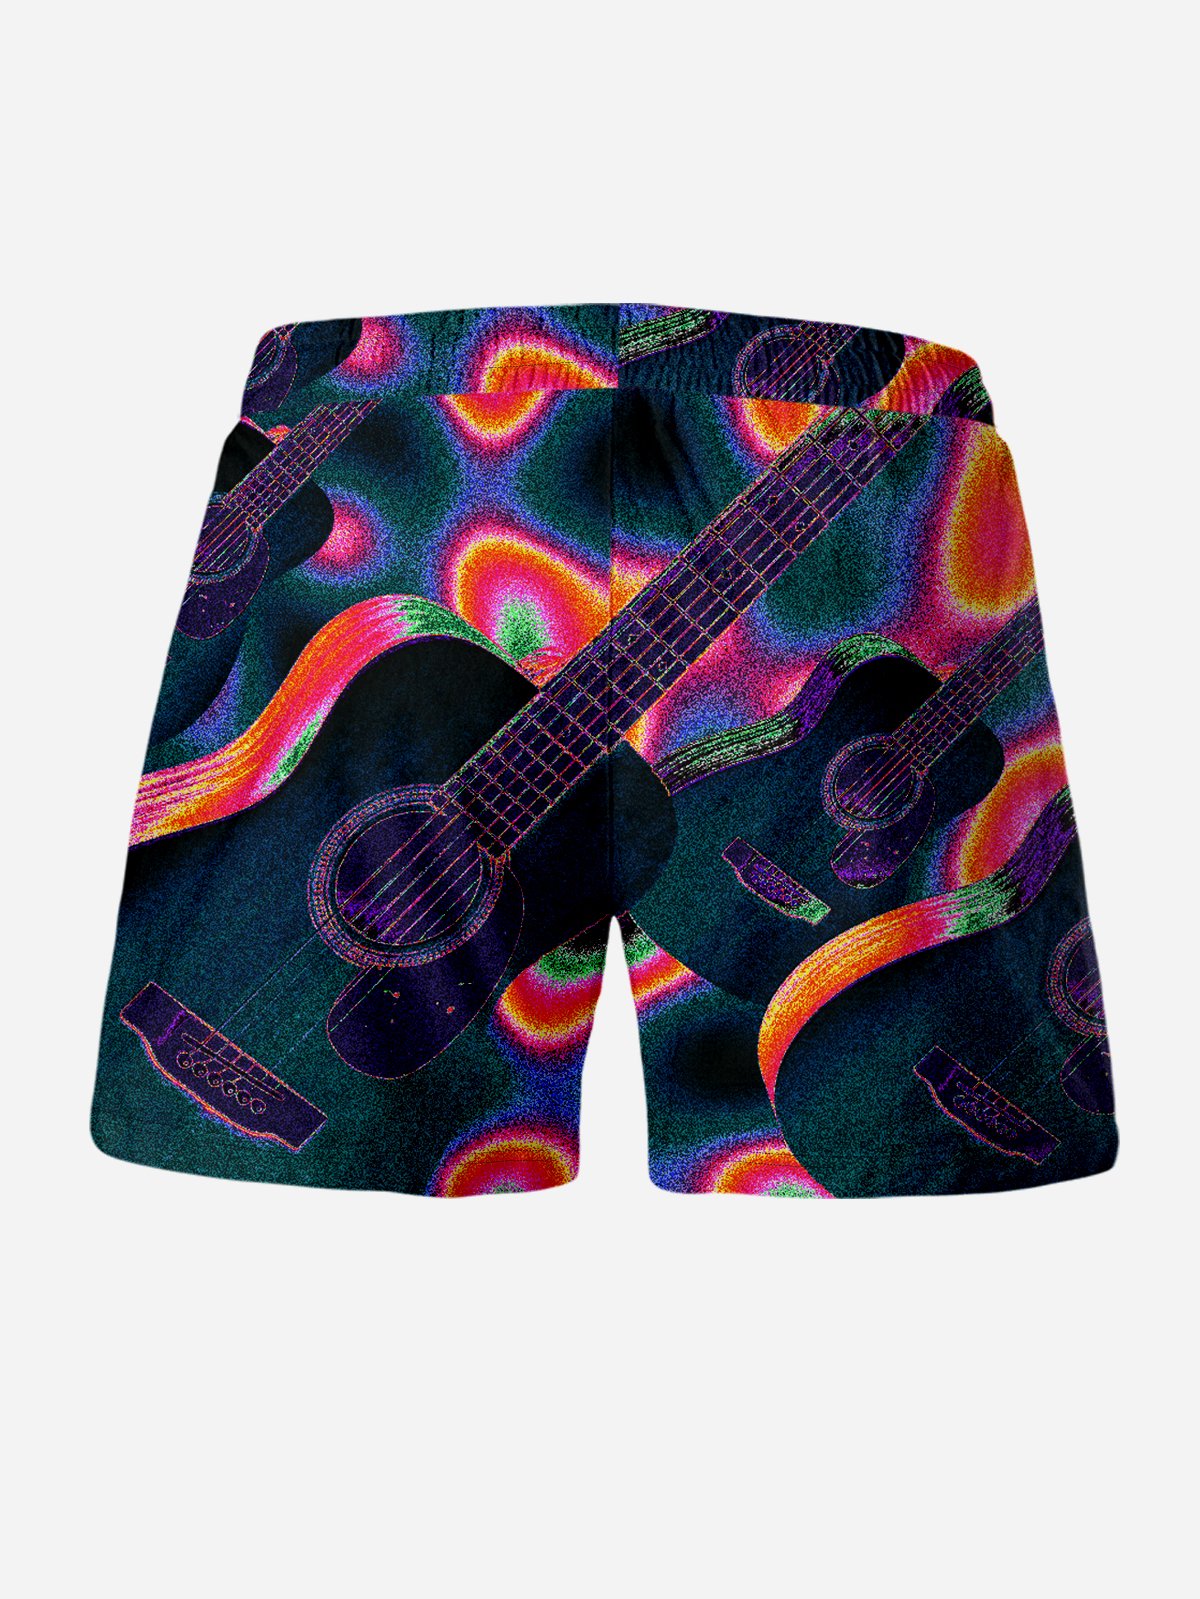 Guitar Drawstring Beach Shorts